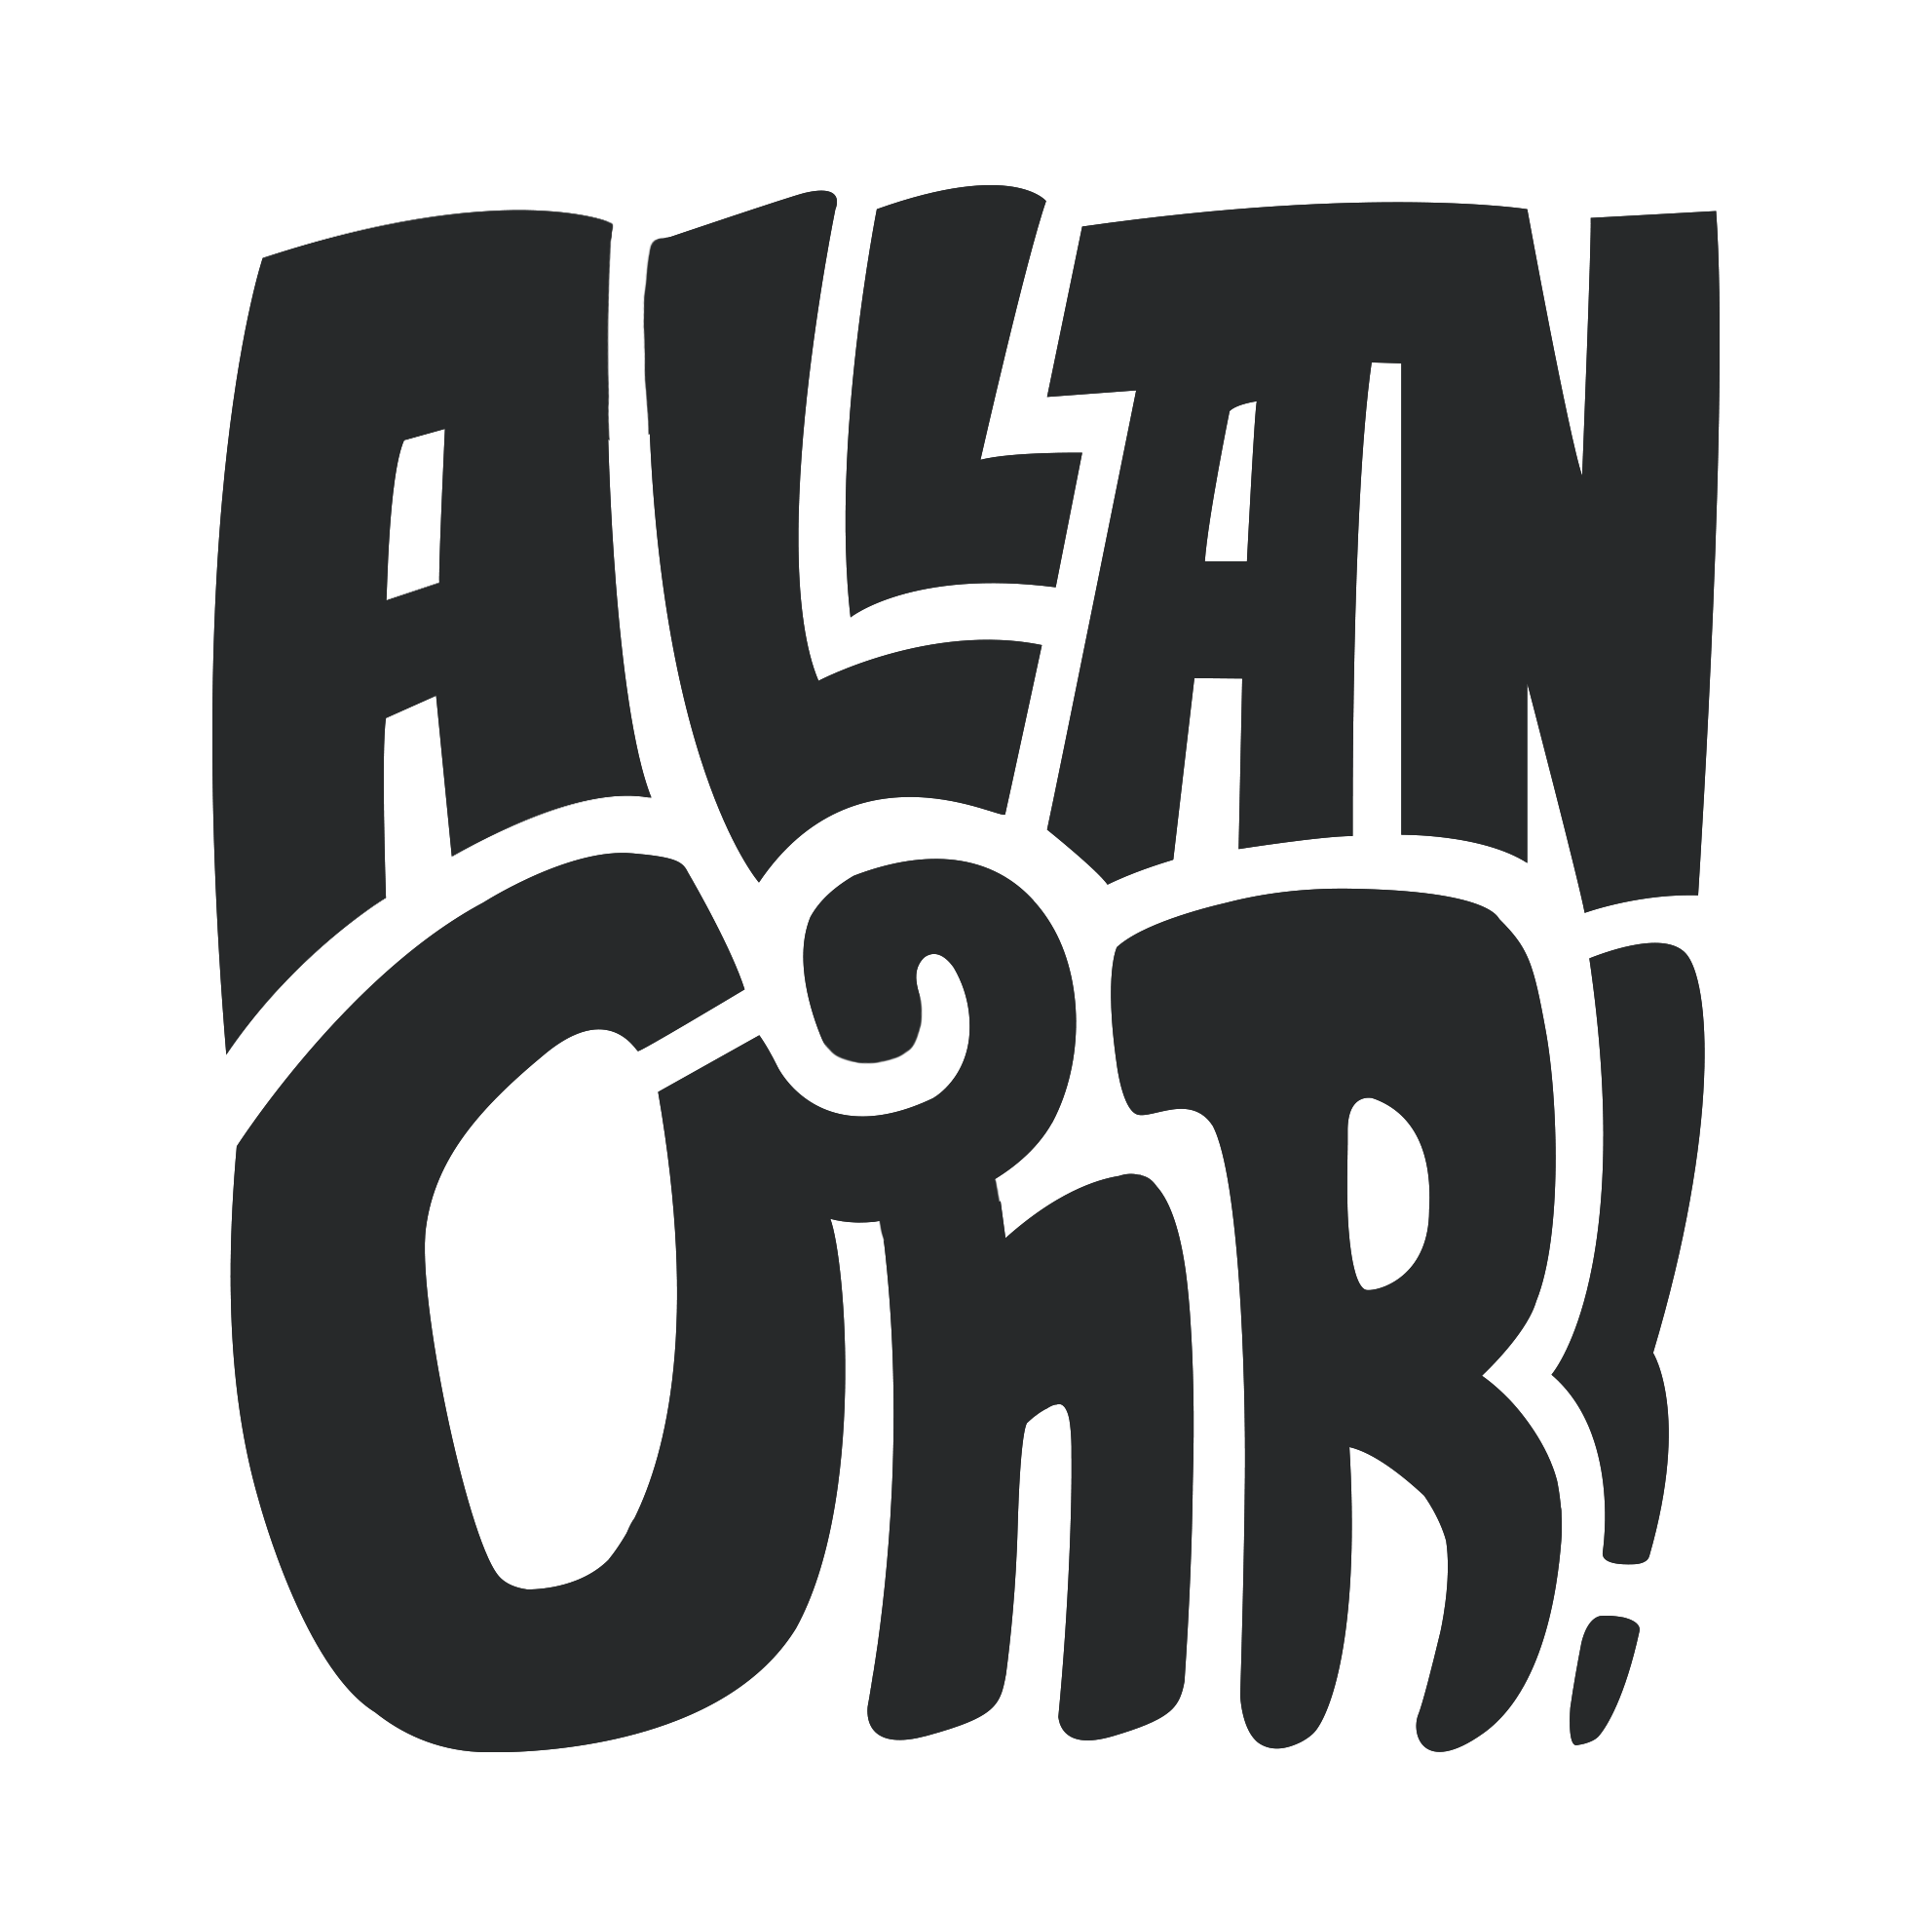 Allan Ohr